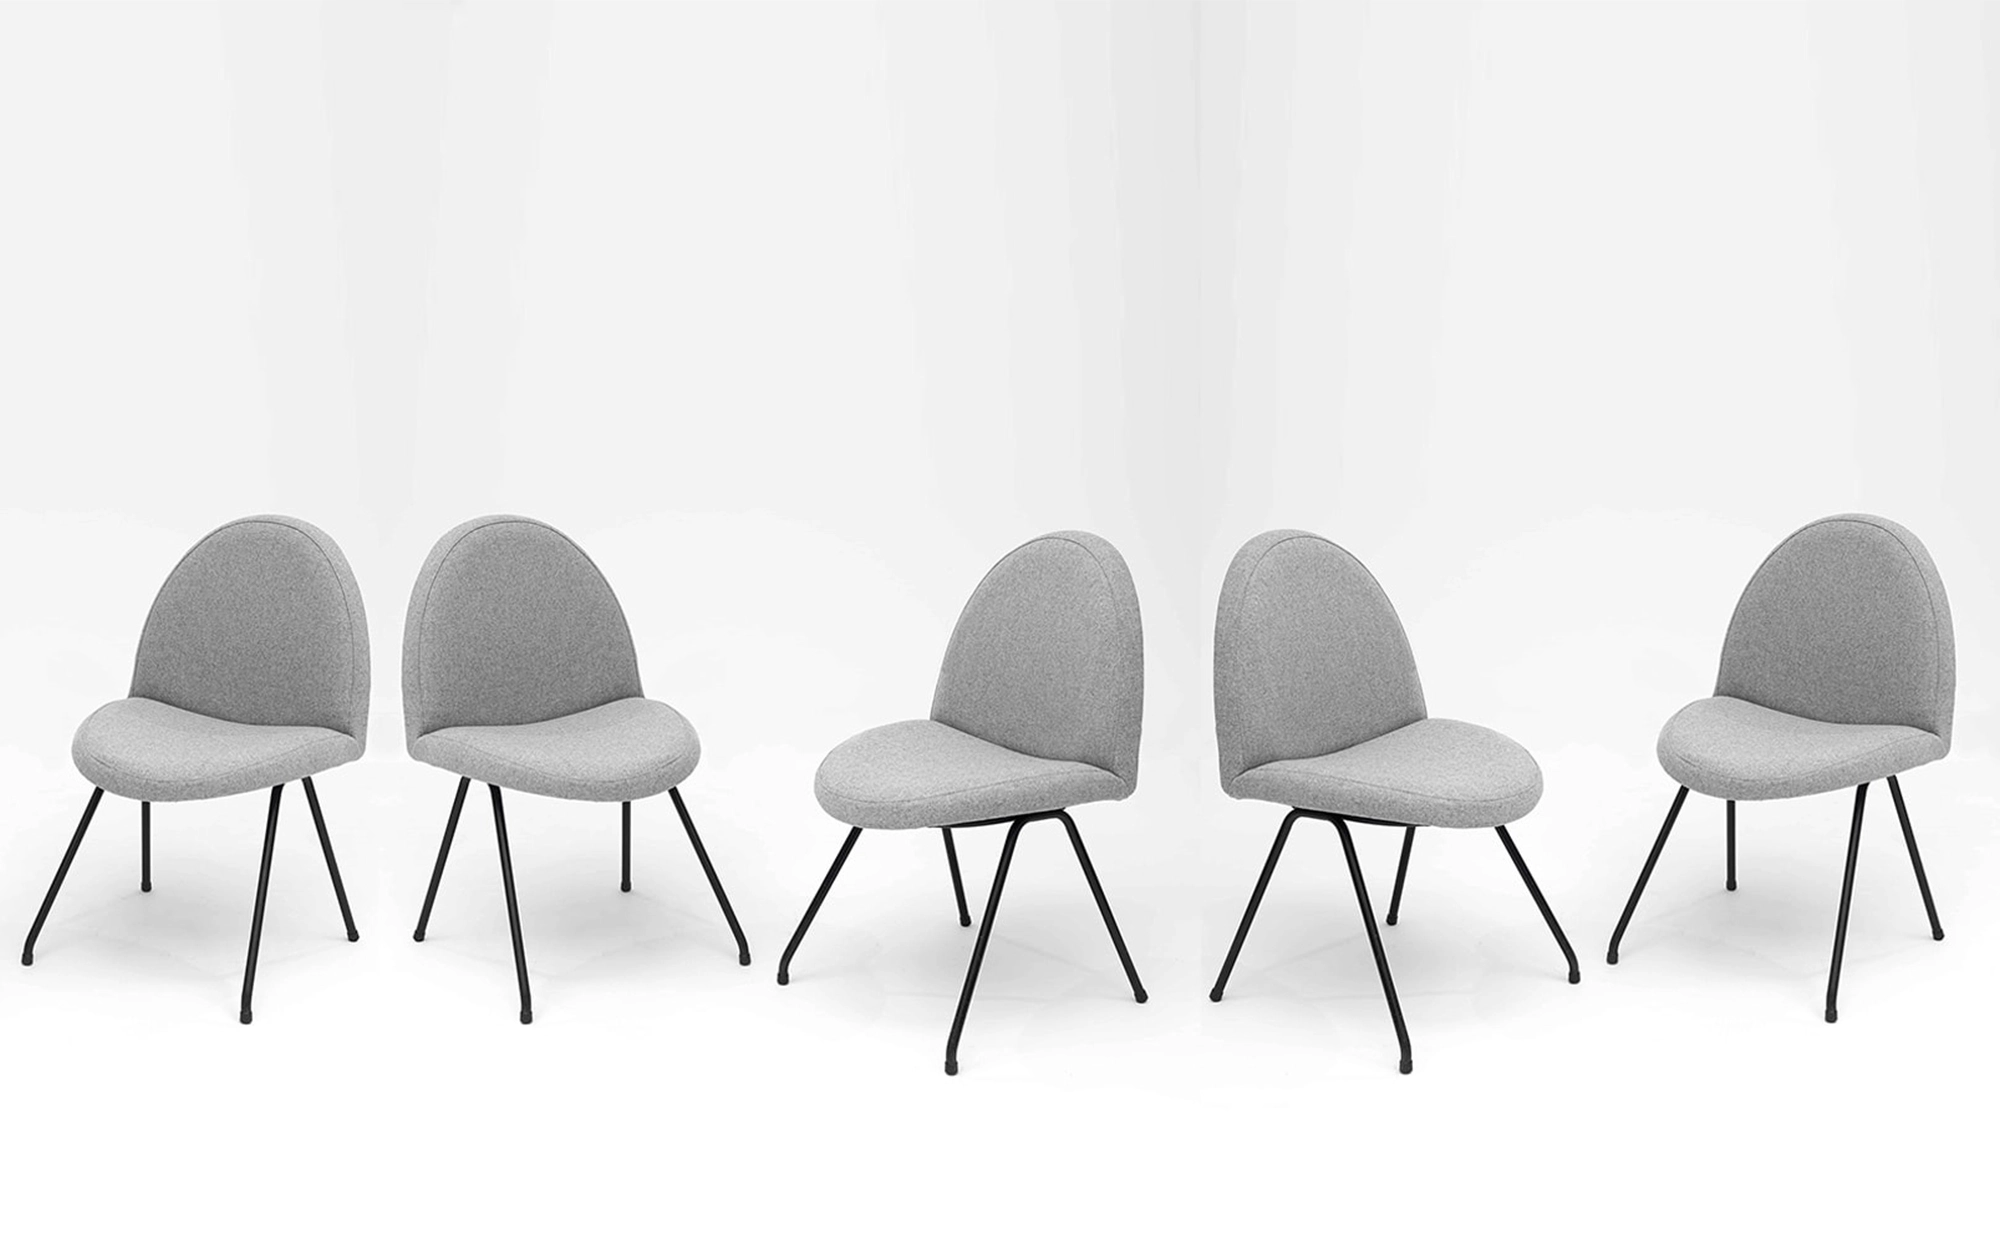 771 (5) - Joseph-André Motte - seating chair- Galerie kreo